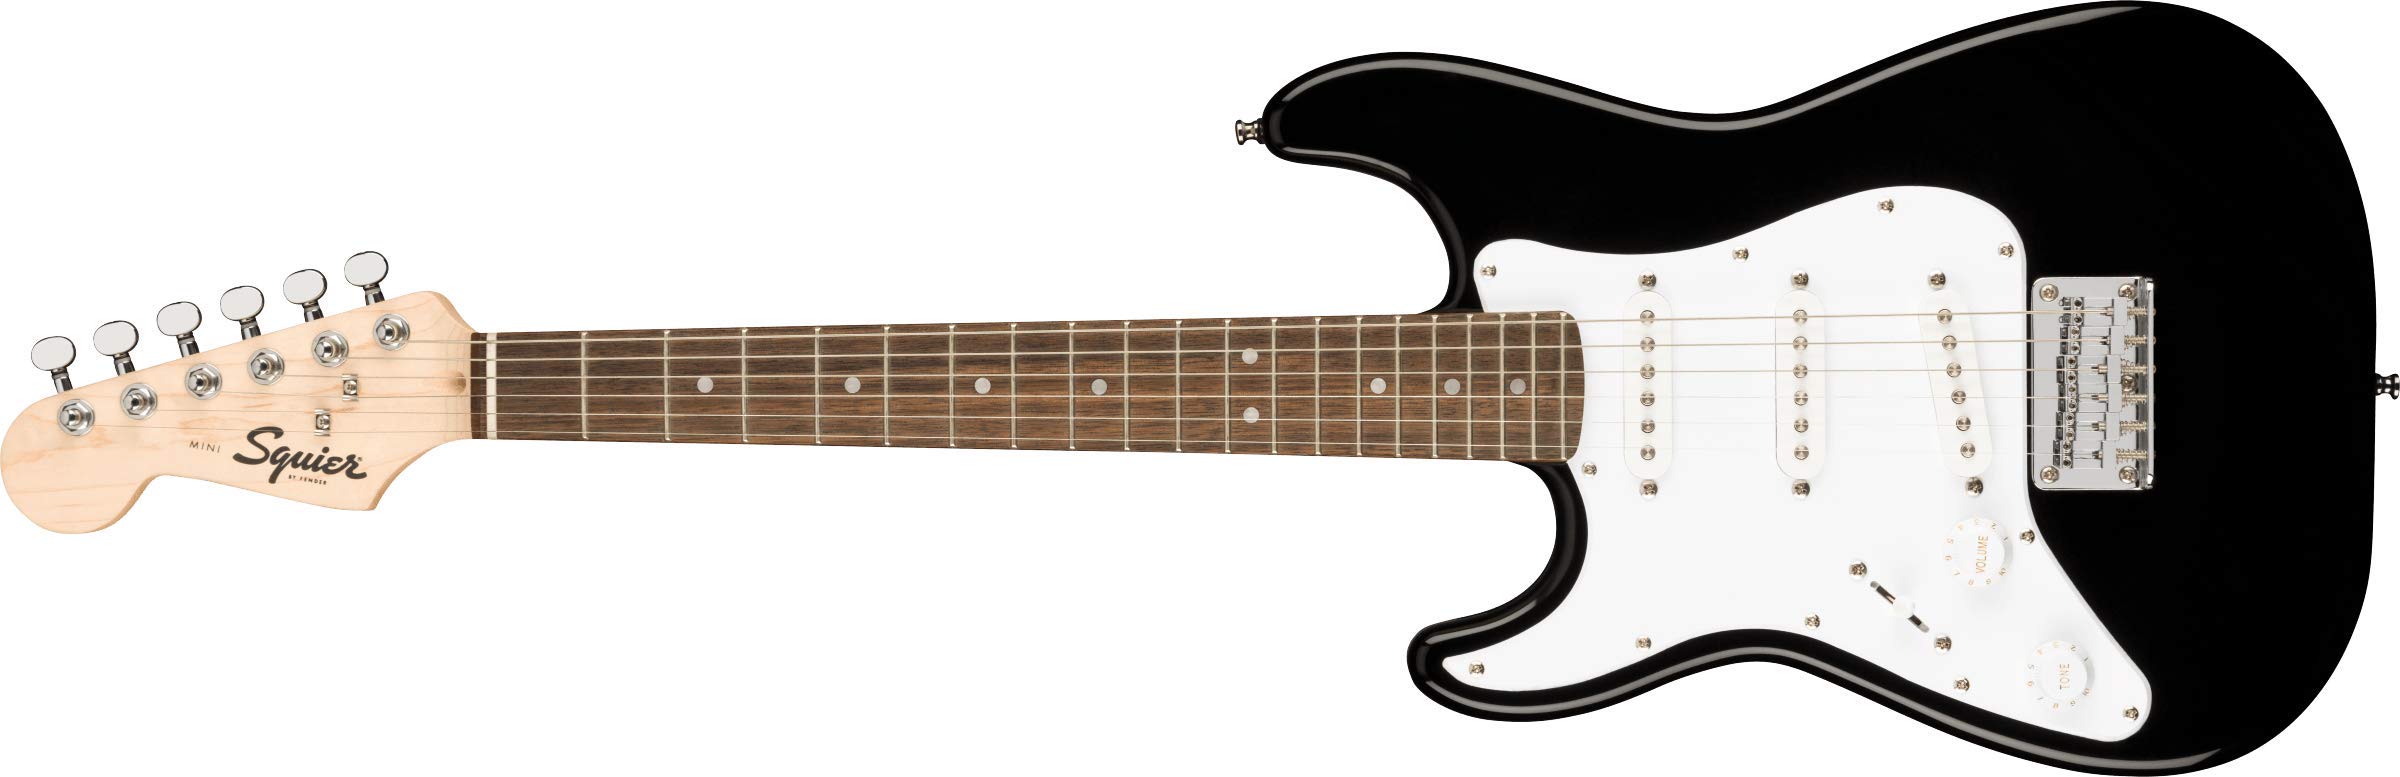 Fender Squier by Mini Strat、ローレル指板、ブラック、LH